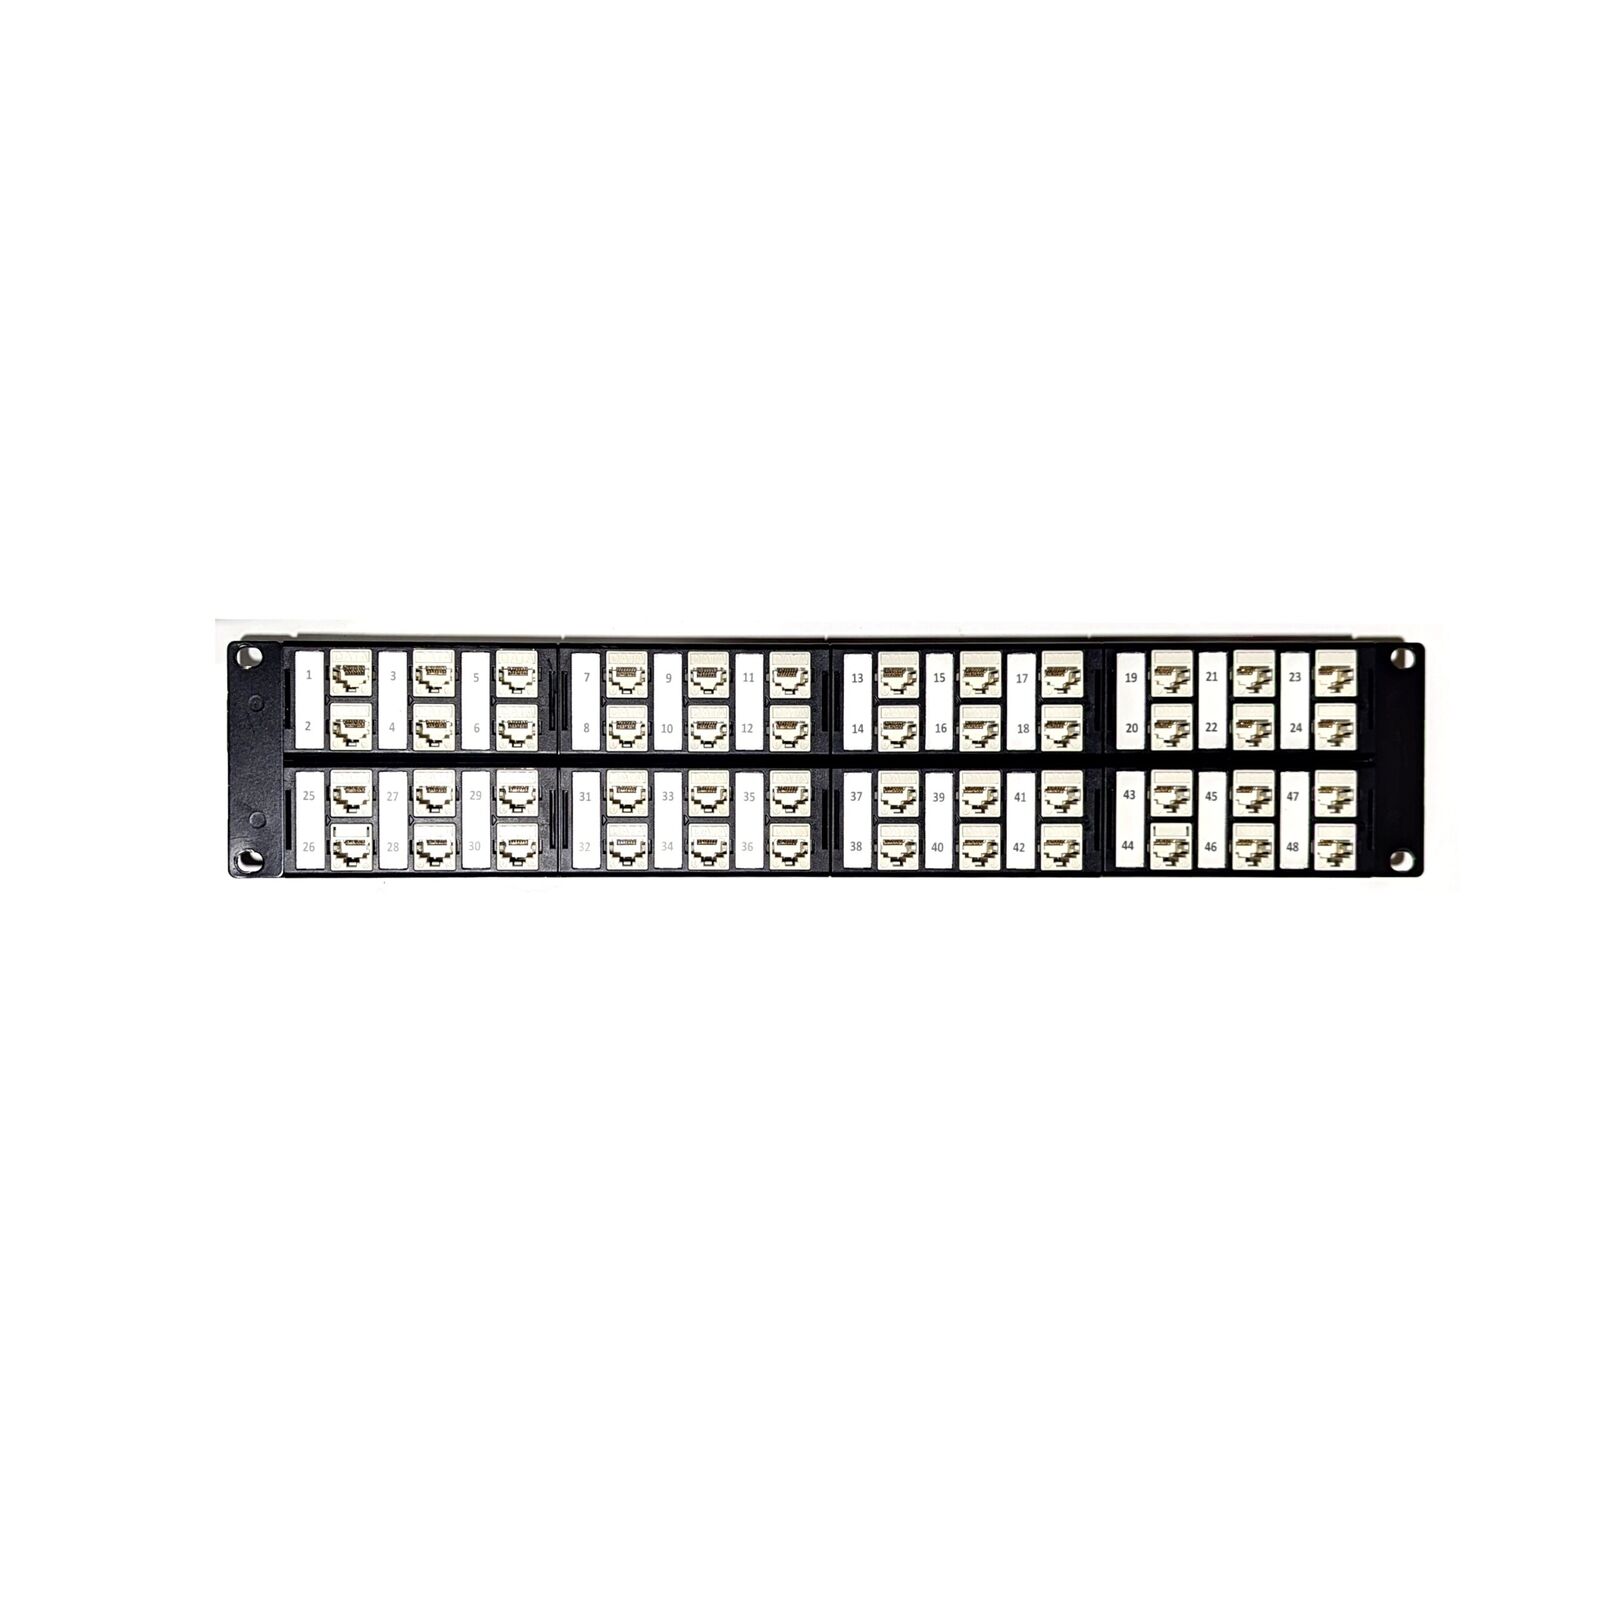 CommScope Systimax 48-Port 2U RJ-45 Cat6 Patch Panel M2000-48 UNJ600